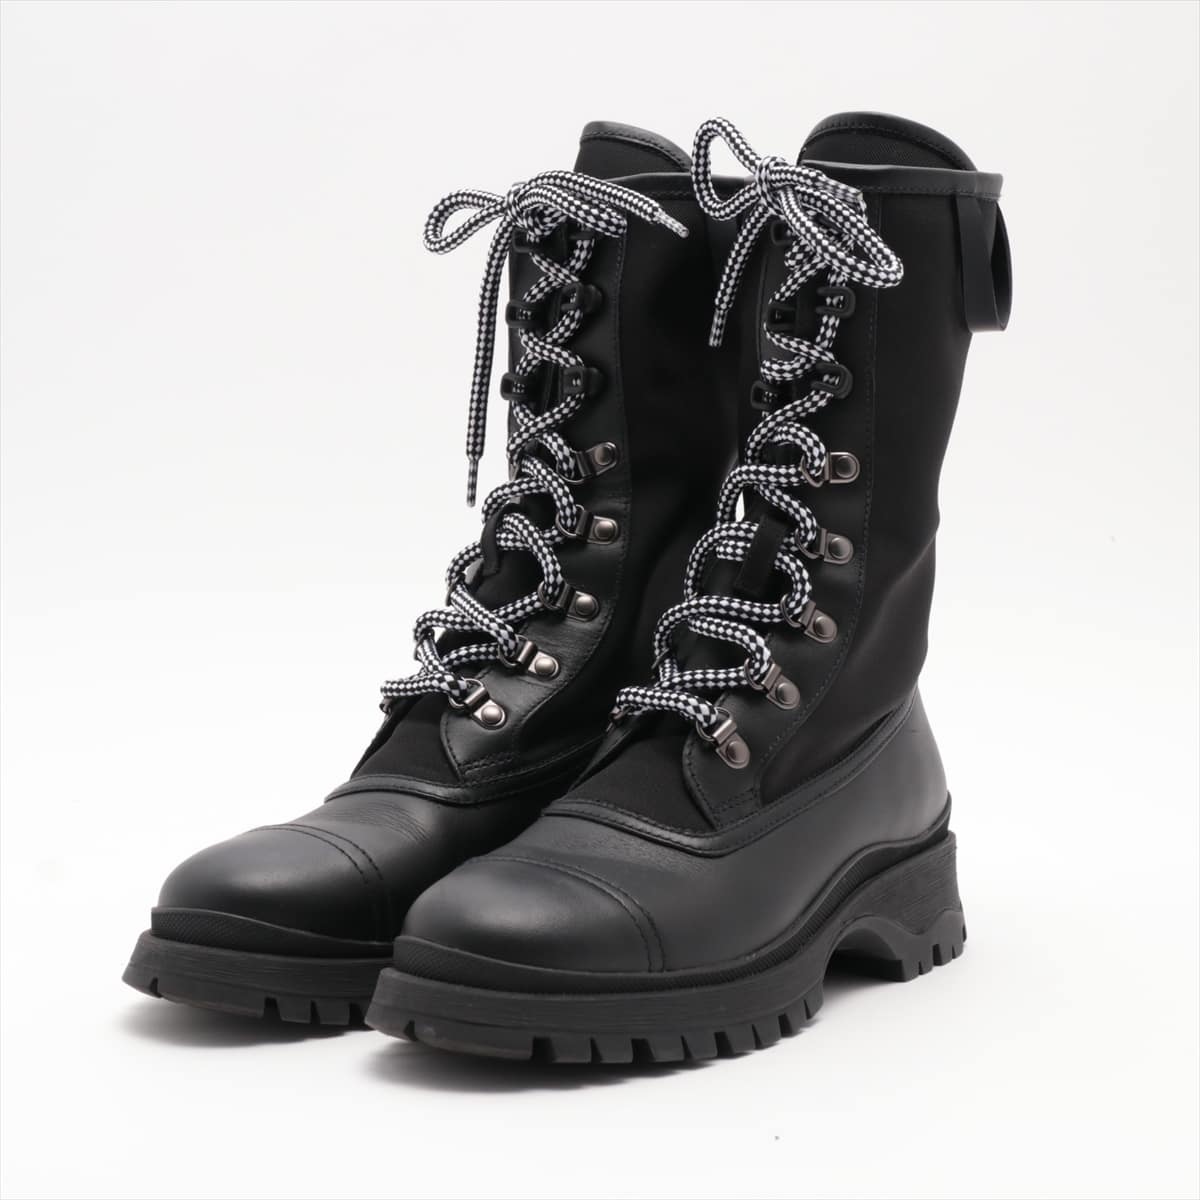 Prada Nylon & Leather Long boots 36 1/2 Ladies' Black Lace up